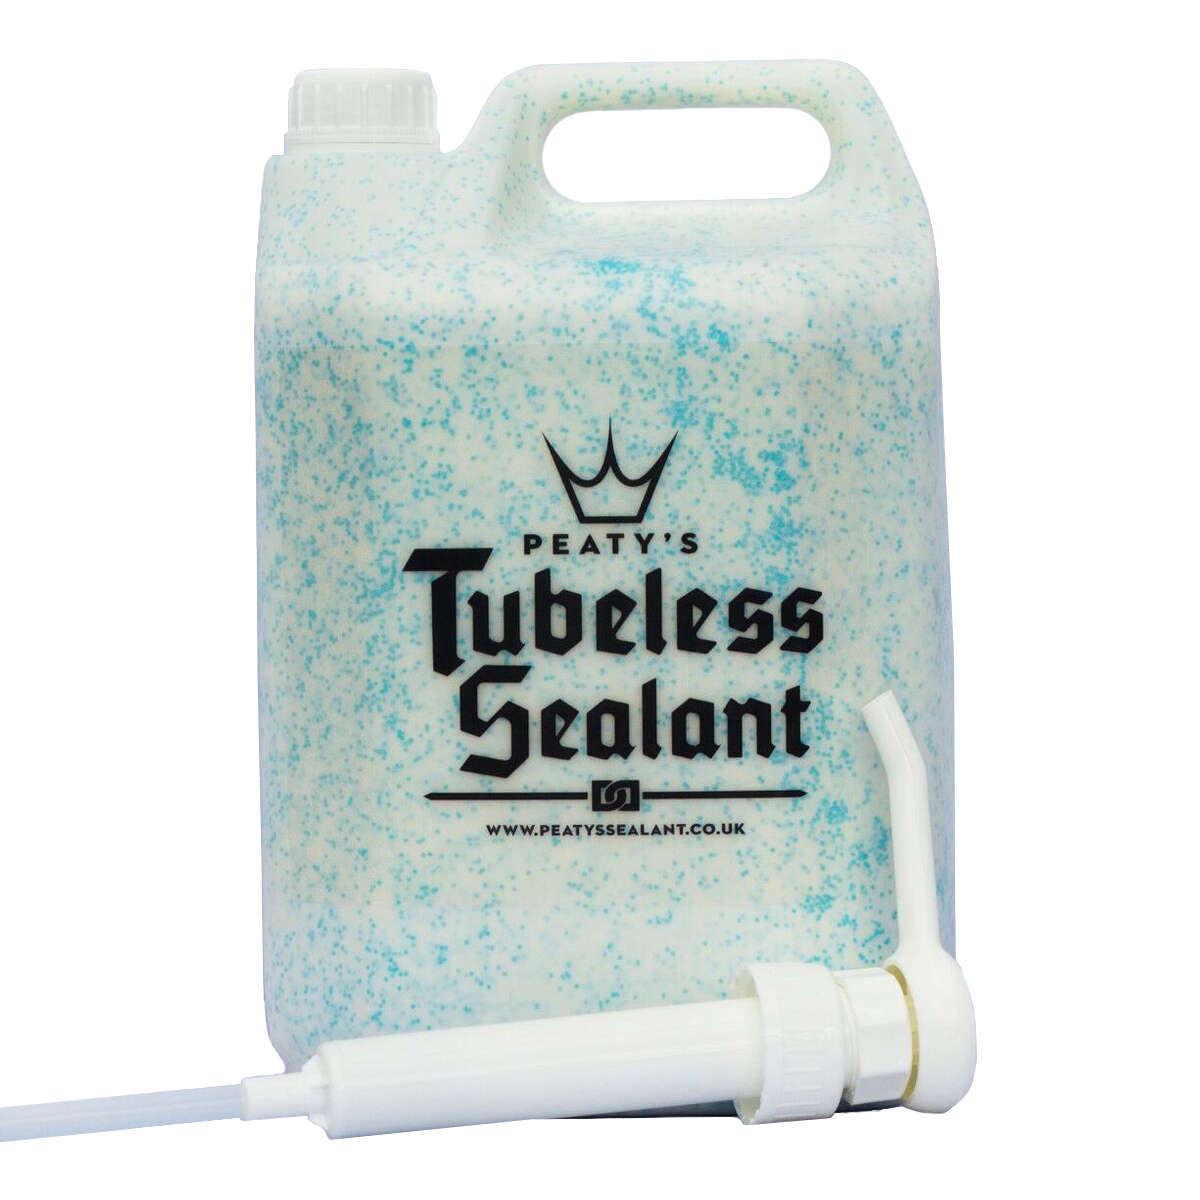 Peaty's Tubeless Reifendichtmittel Tubeless Sealant 5 Liter Werkstatt-Pumpflasche